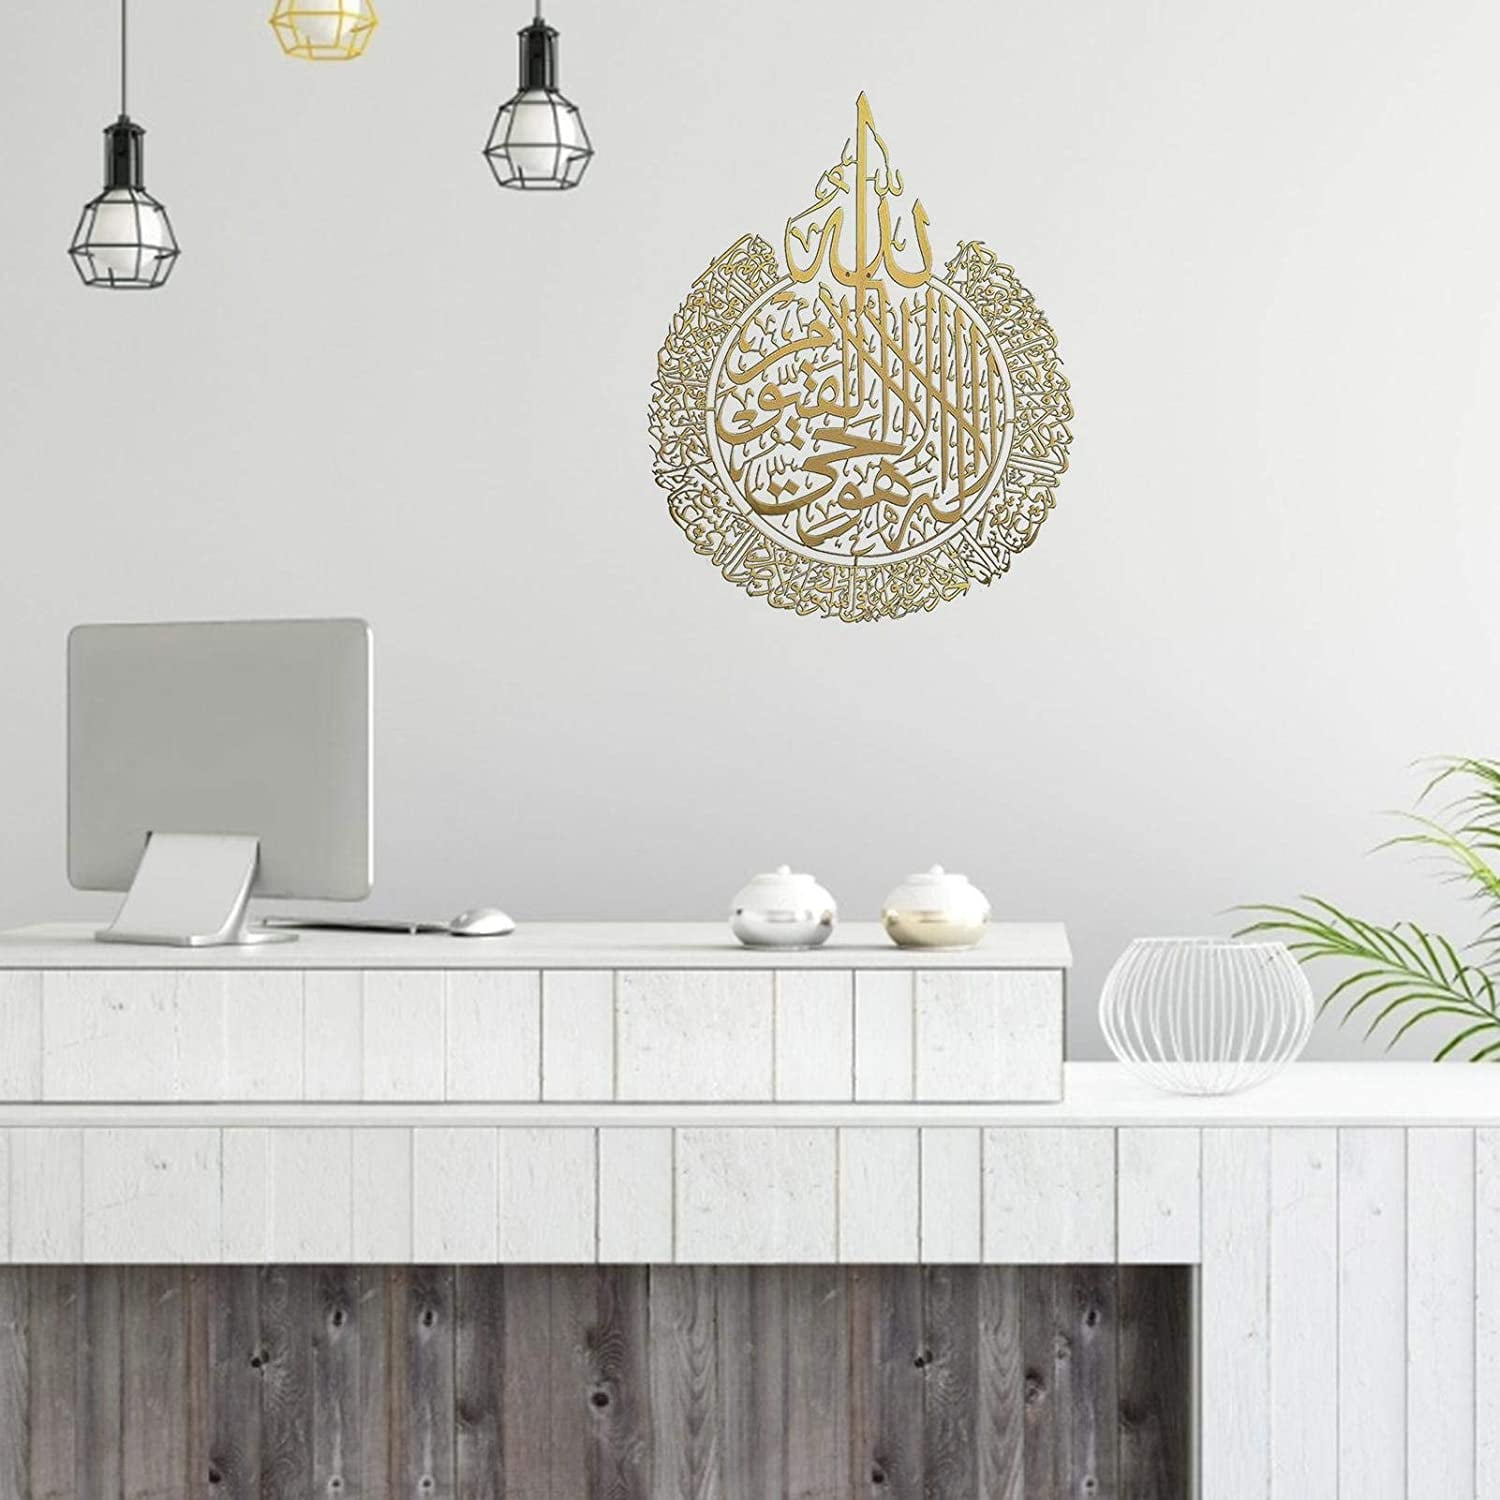 1x Pc Ramadan Islamic Wall Decor Acrylic Home Calligraphy Art Decor Gift Muslims 